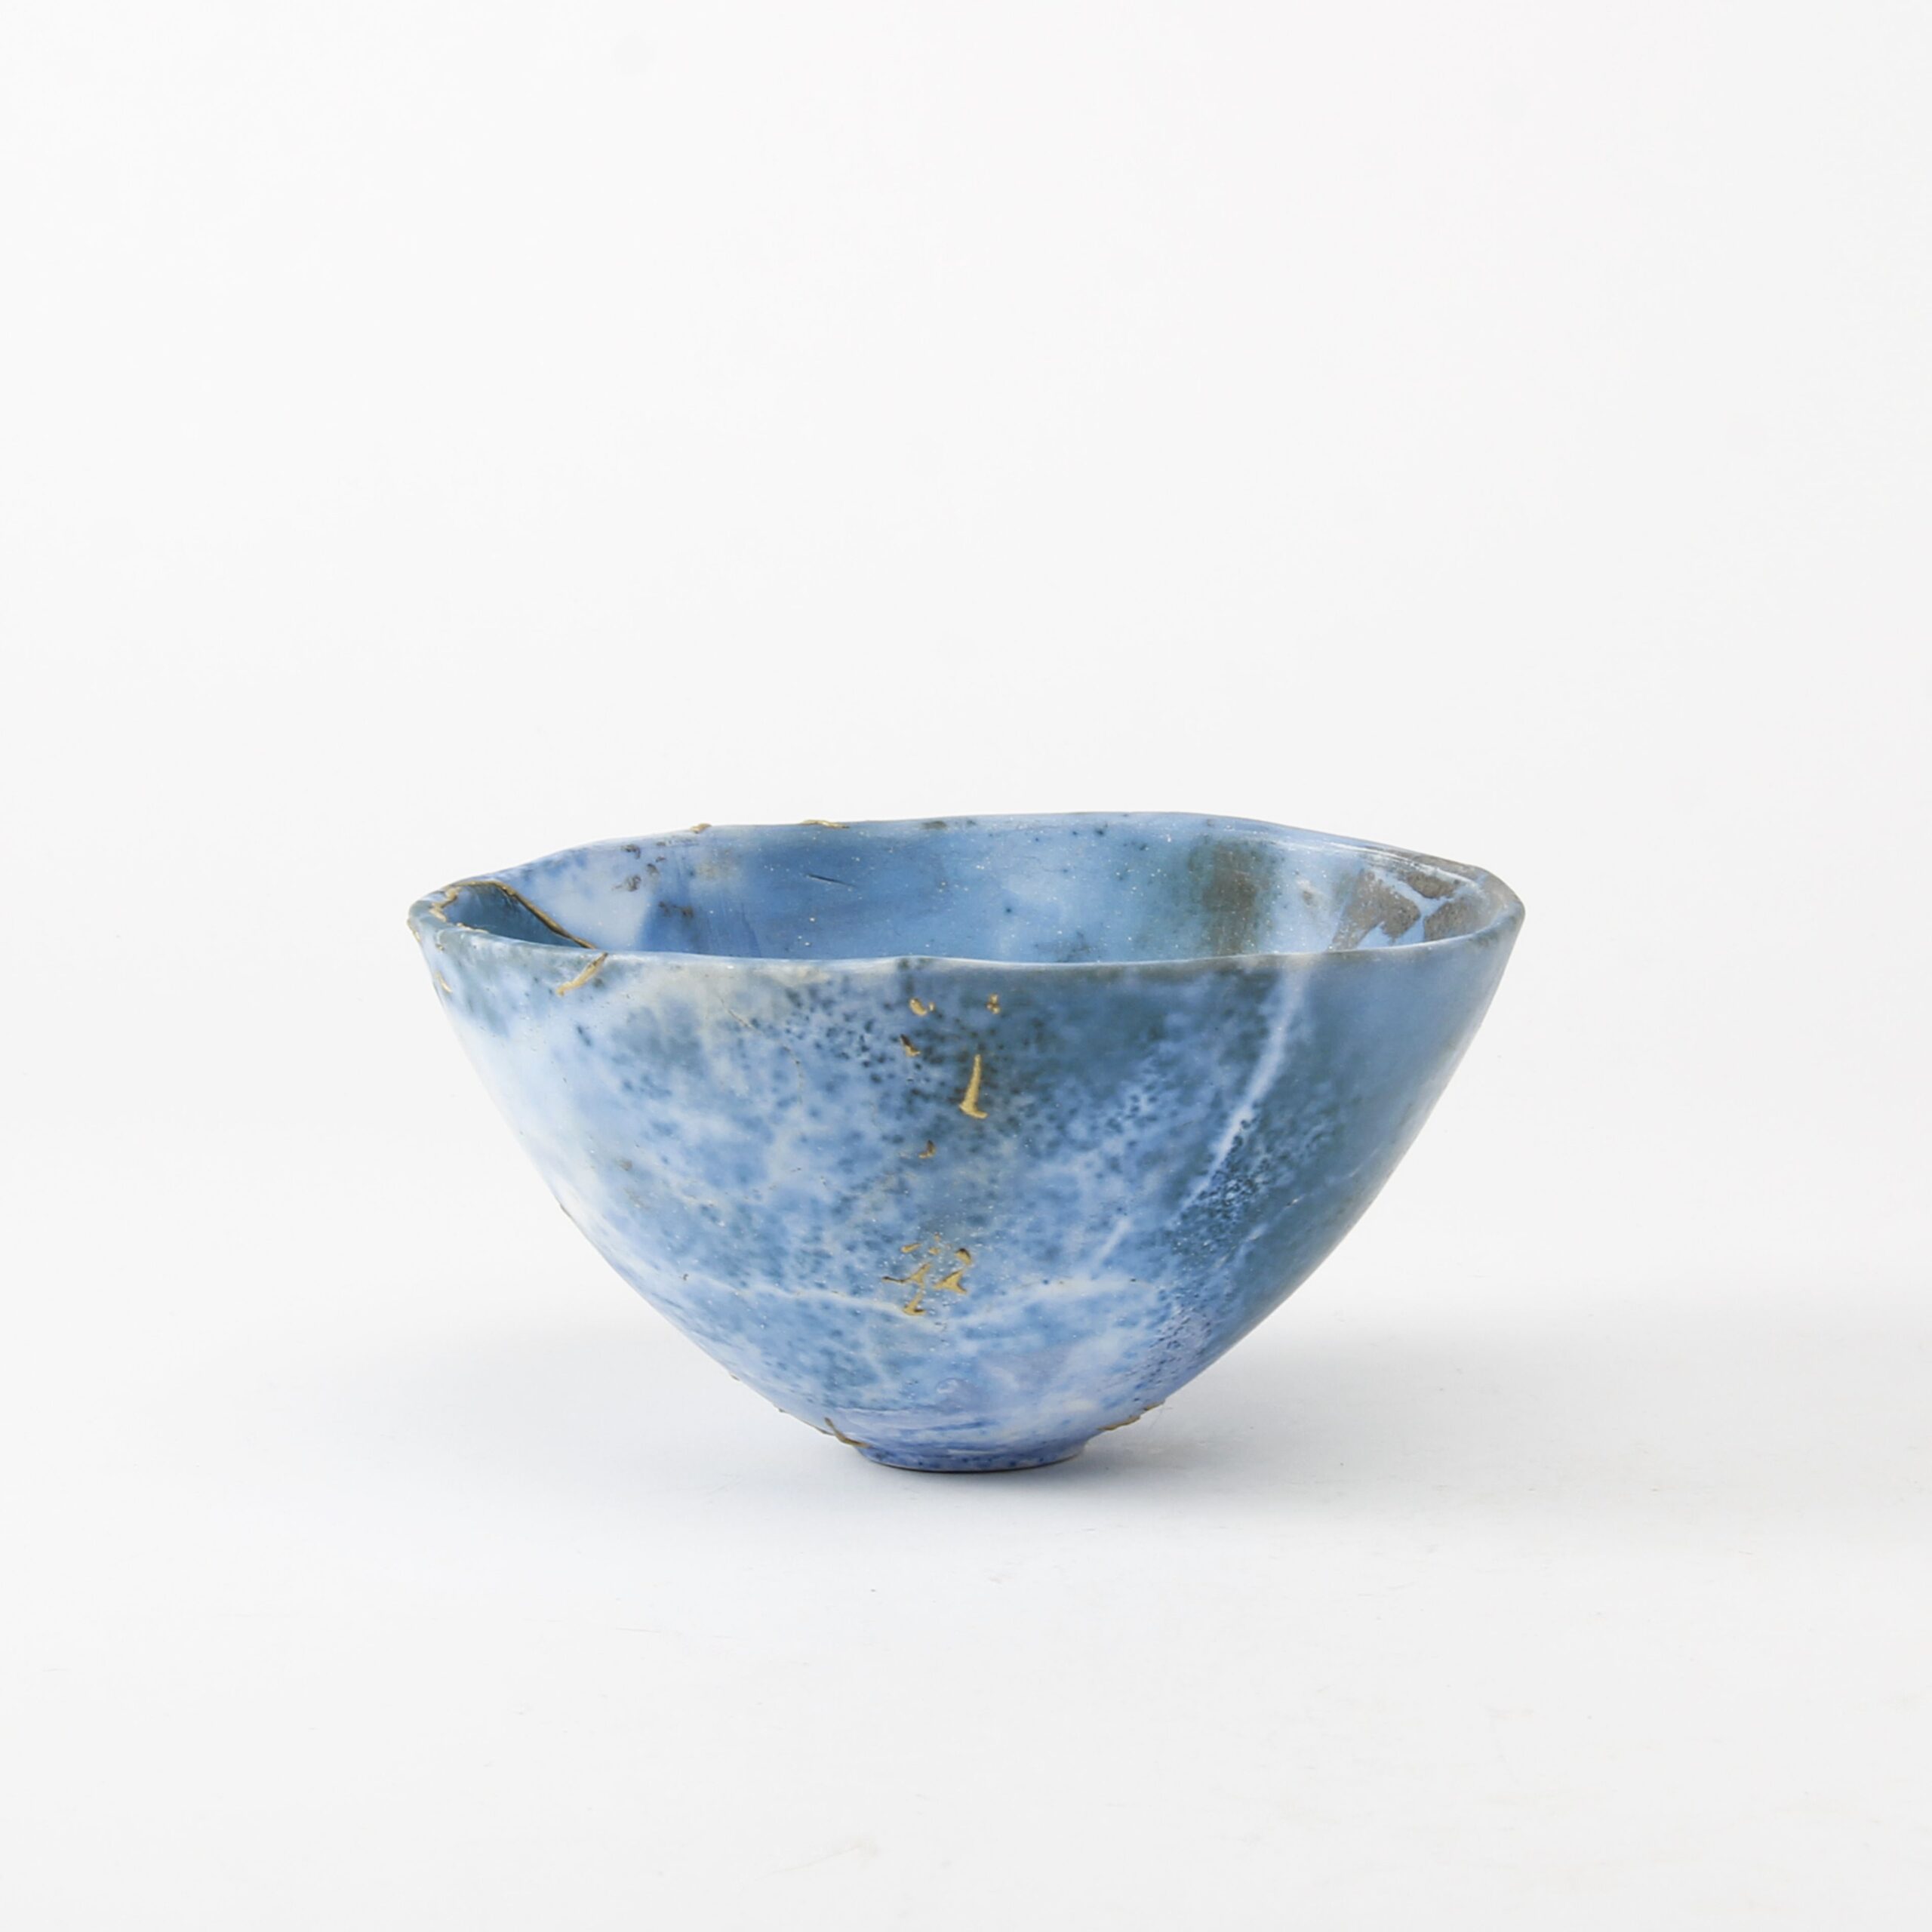 Alison Brannen: Medium Bowl Product Image 5 of 6